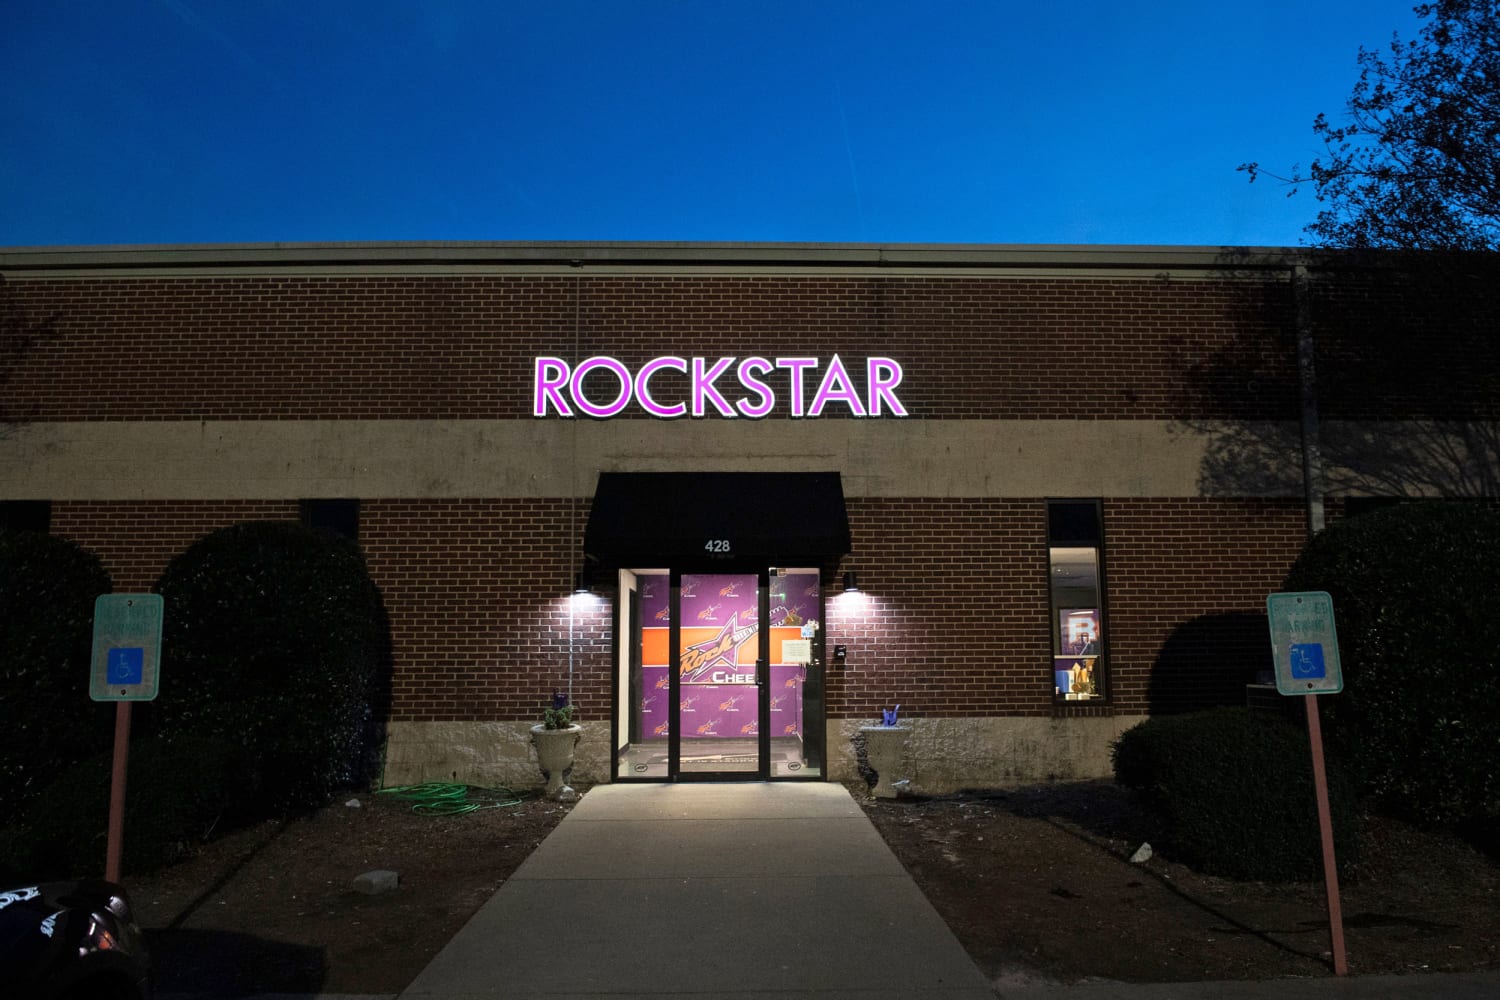 Death of Rockstar Cheer founder under investigation in Greenville